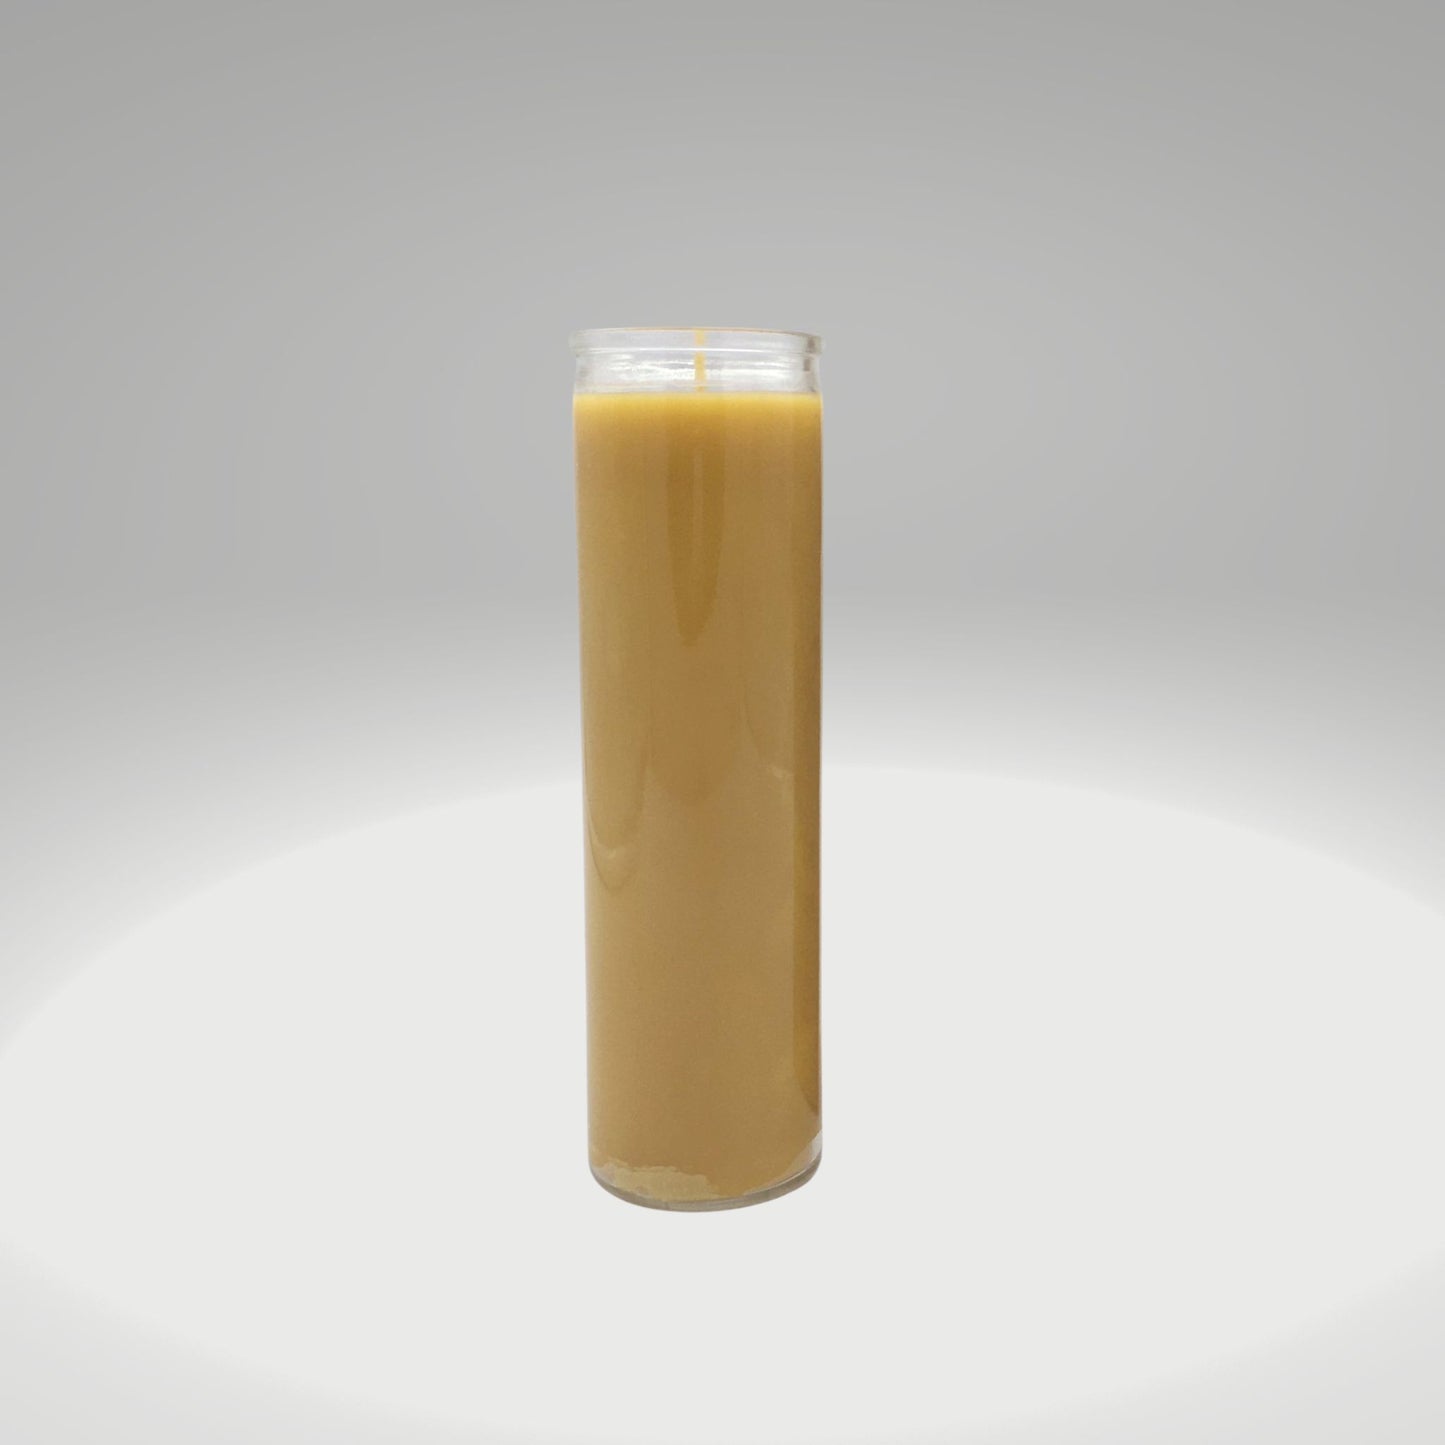 Glass Pillar Beeswax Candle